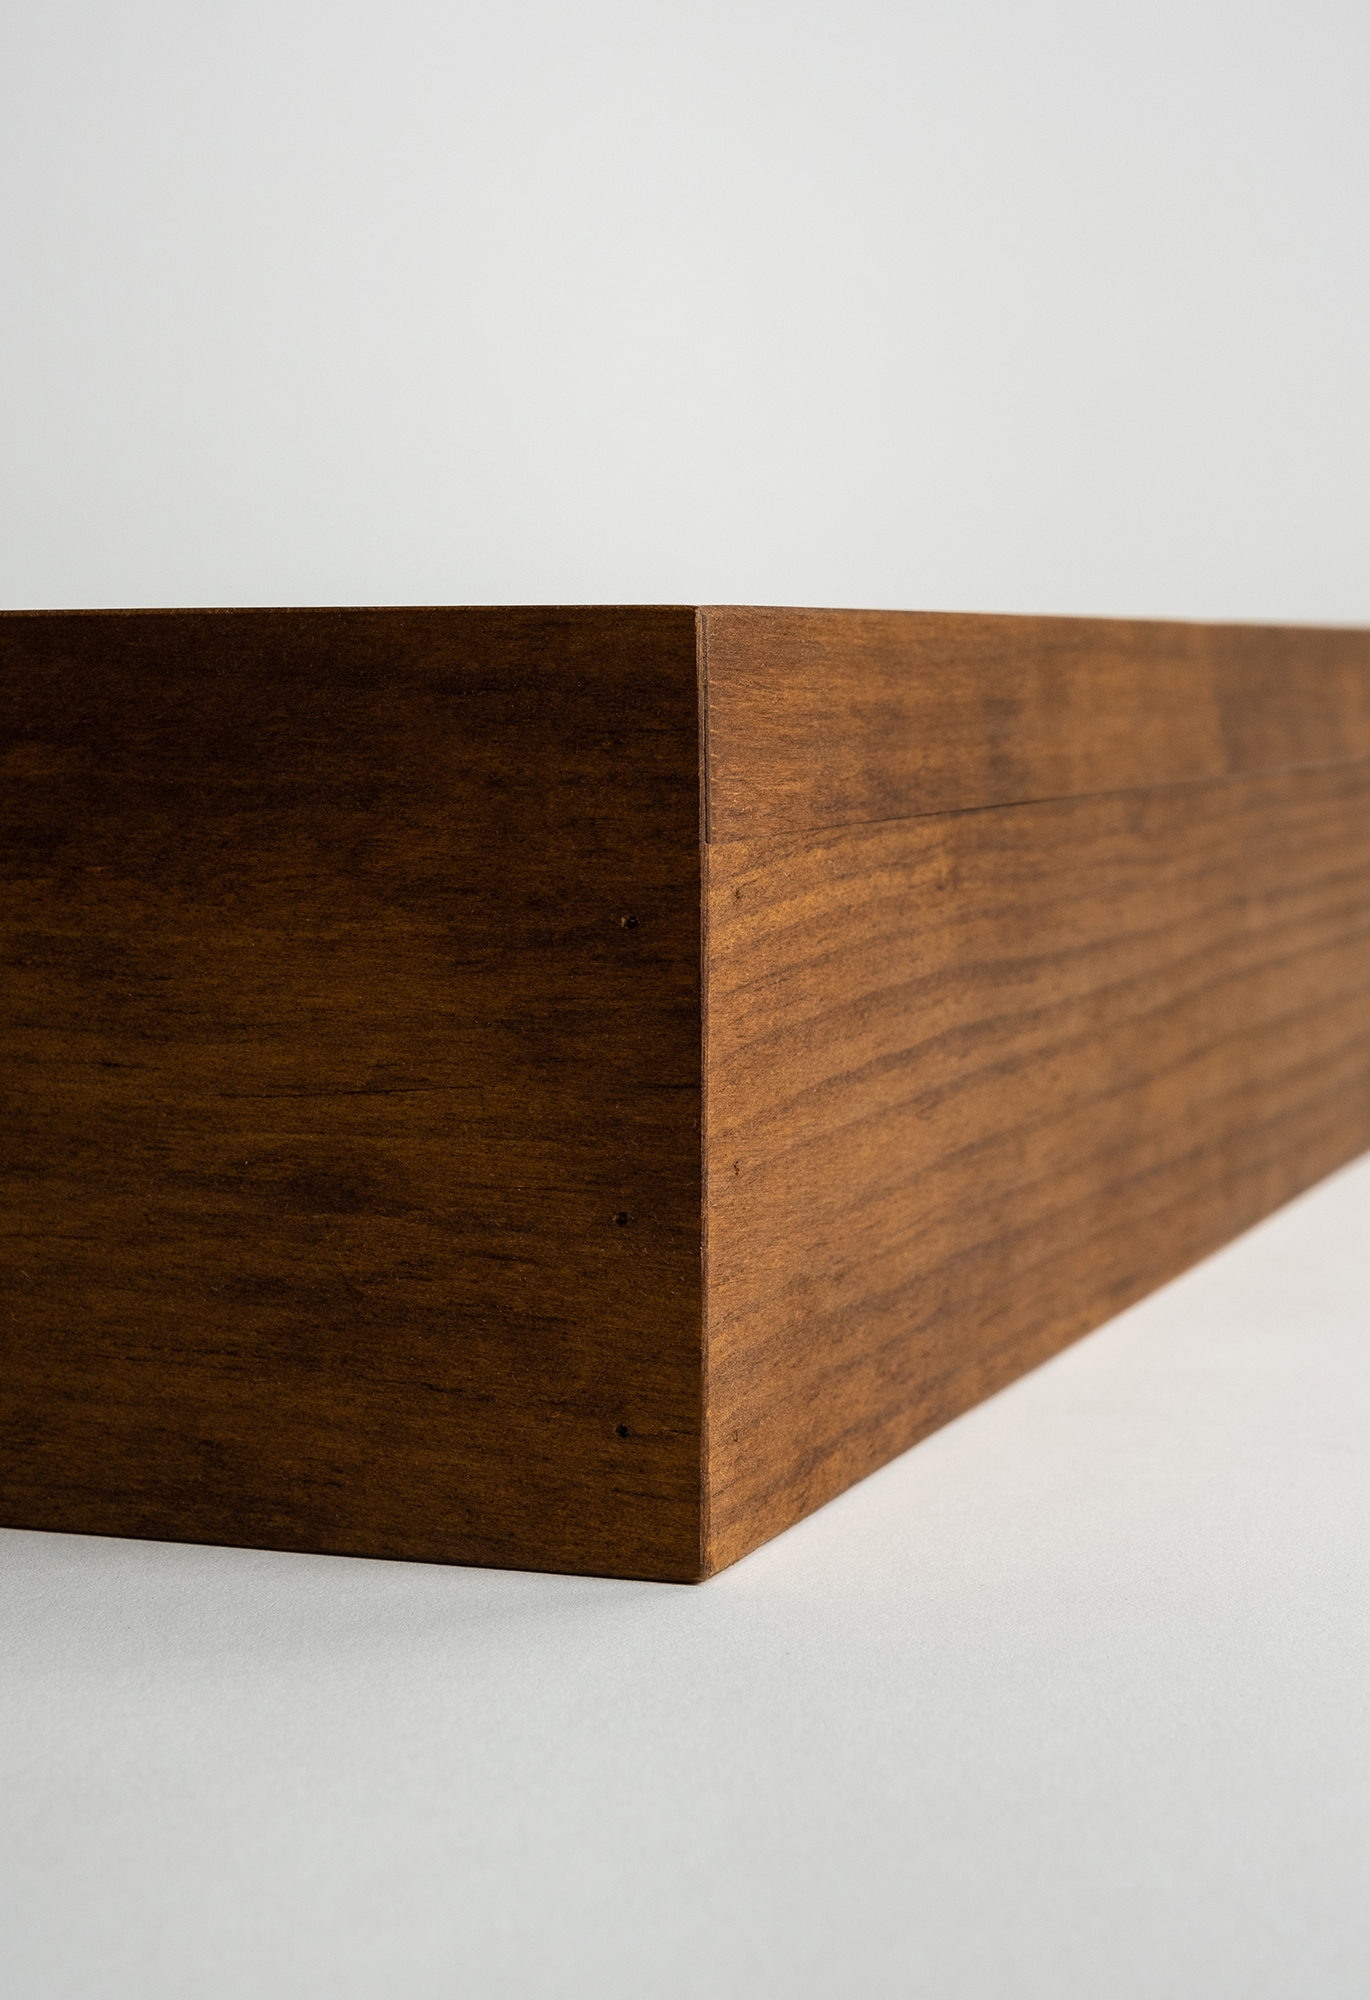 Wood Box Konstruktive Details 4